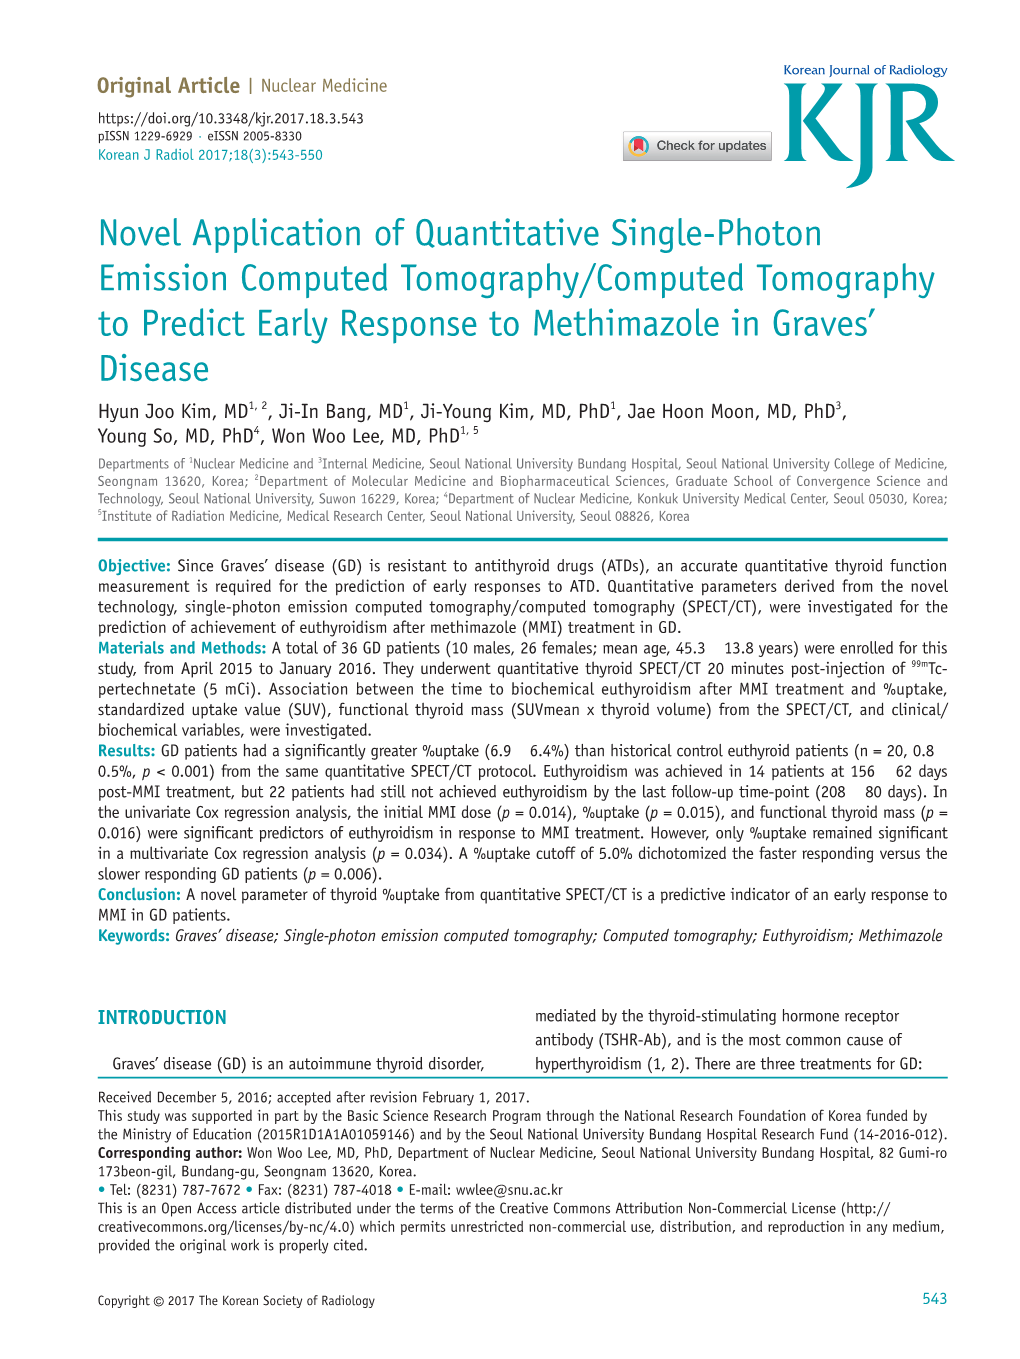 Novel Application of Quantitative Single-Photon Emission Computed